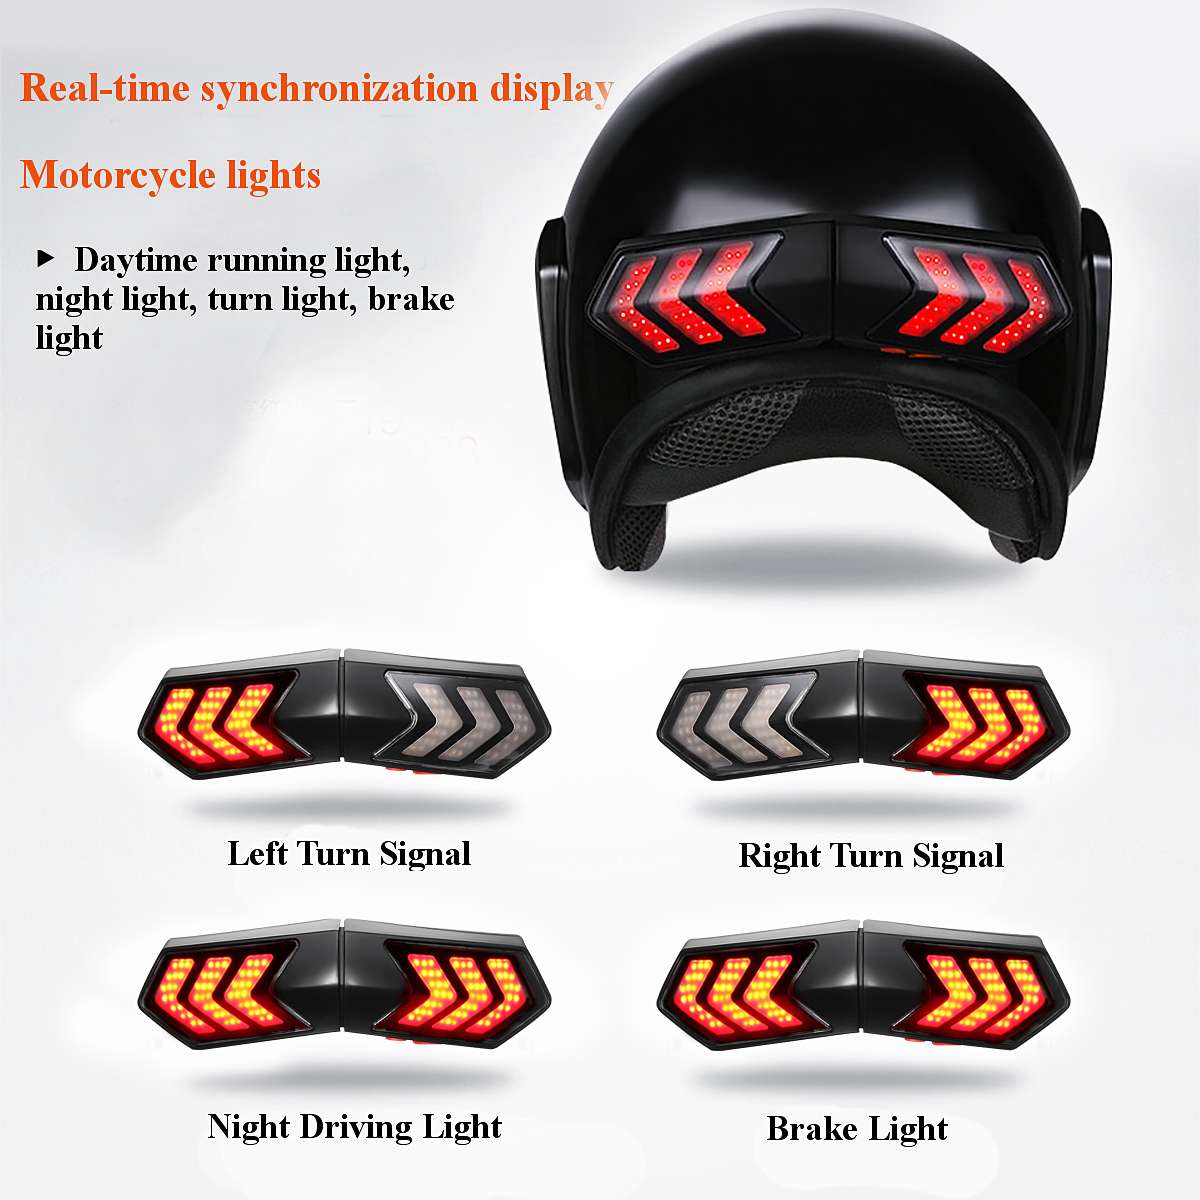 Motorcycle Helmet Wireless LED Safety Brake Light Turn Signal Light Indicators Motorbike Scooter Motocross Helmet